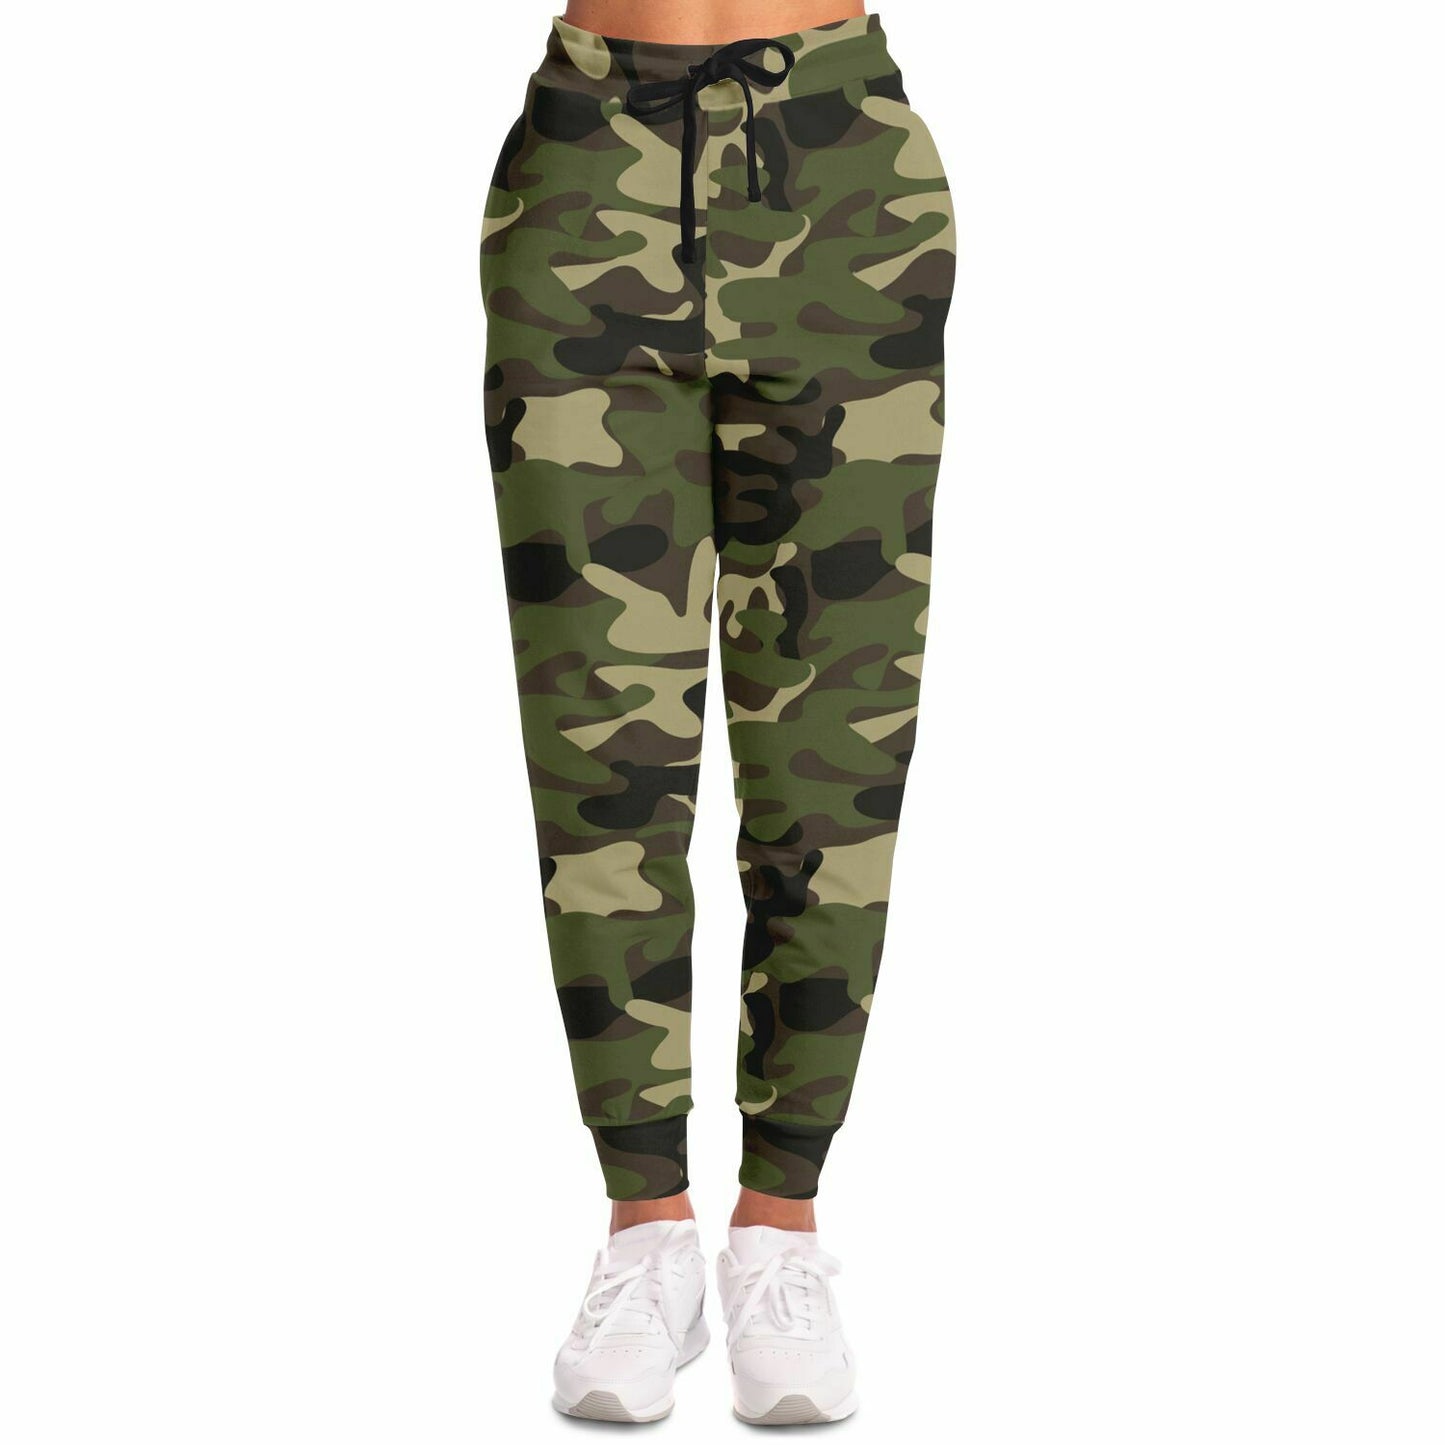 Camo Joggers Sweatpants with Pockets, Camouflage Green Women Men Female Ladies Fleece Comfy Sweats Pants Loungewear Bottoms